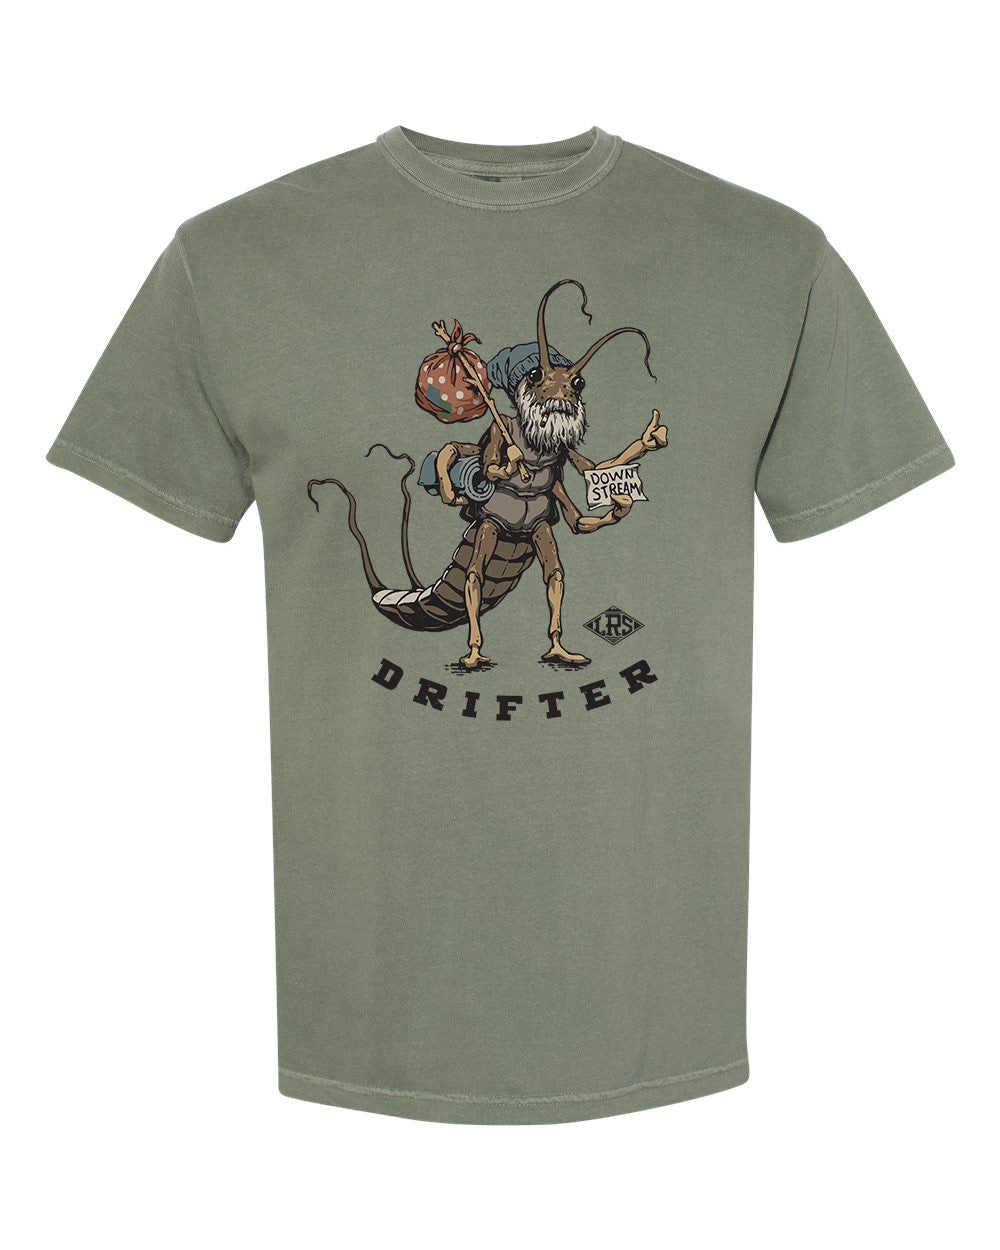 DEAR FISHING, I LOVE YOU T-Shirt (Military Green)